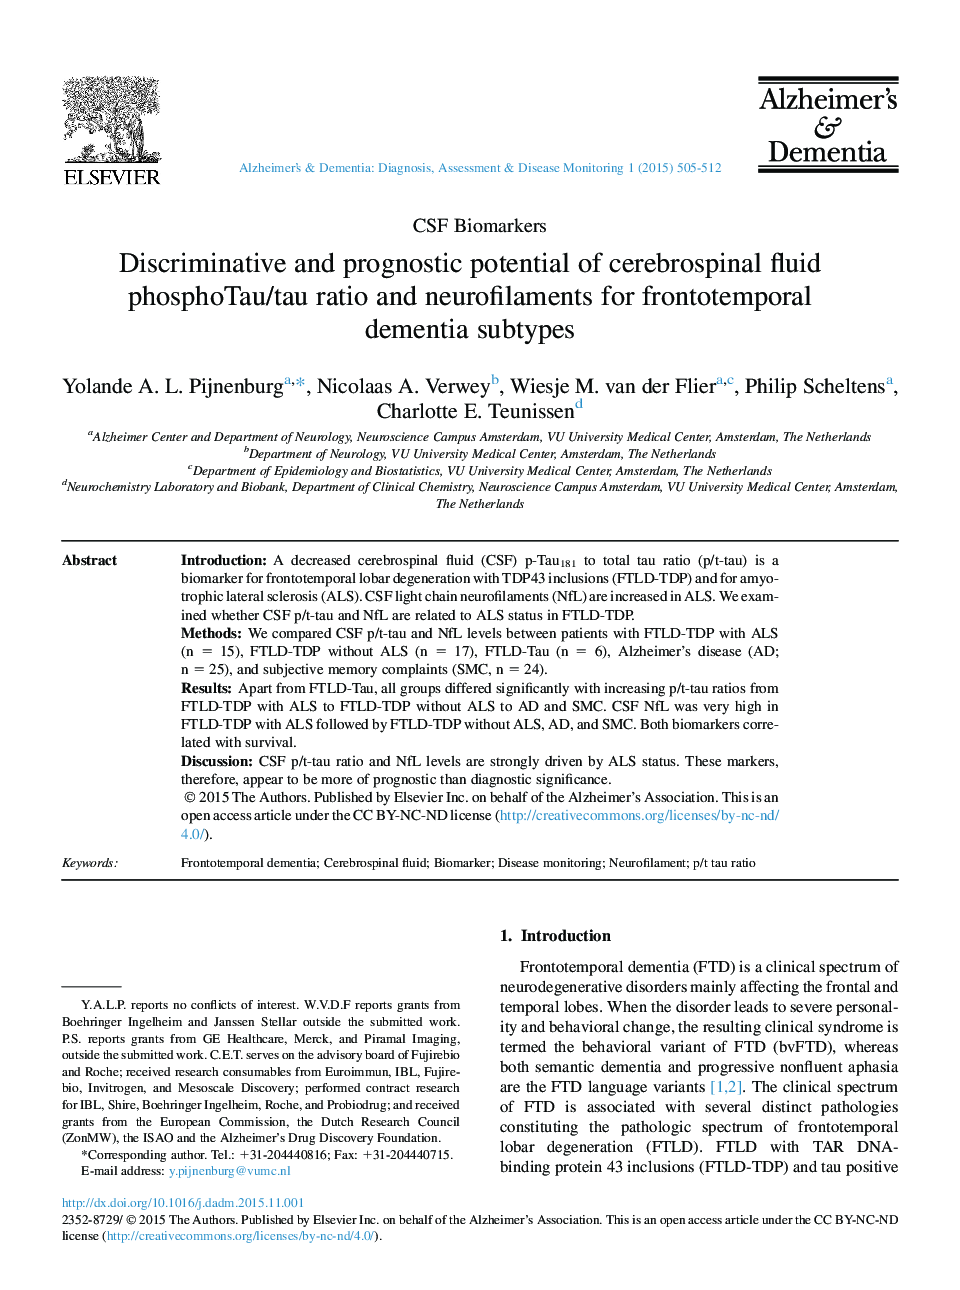 Discriminative and prognostic potential of cerebrospinal fluid phosphoTau/tau ratio and neurofilaments for frontotemporal dementia subtypes 